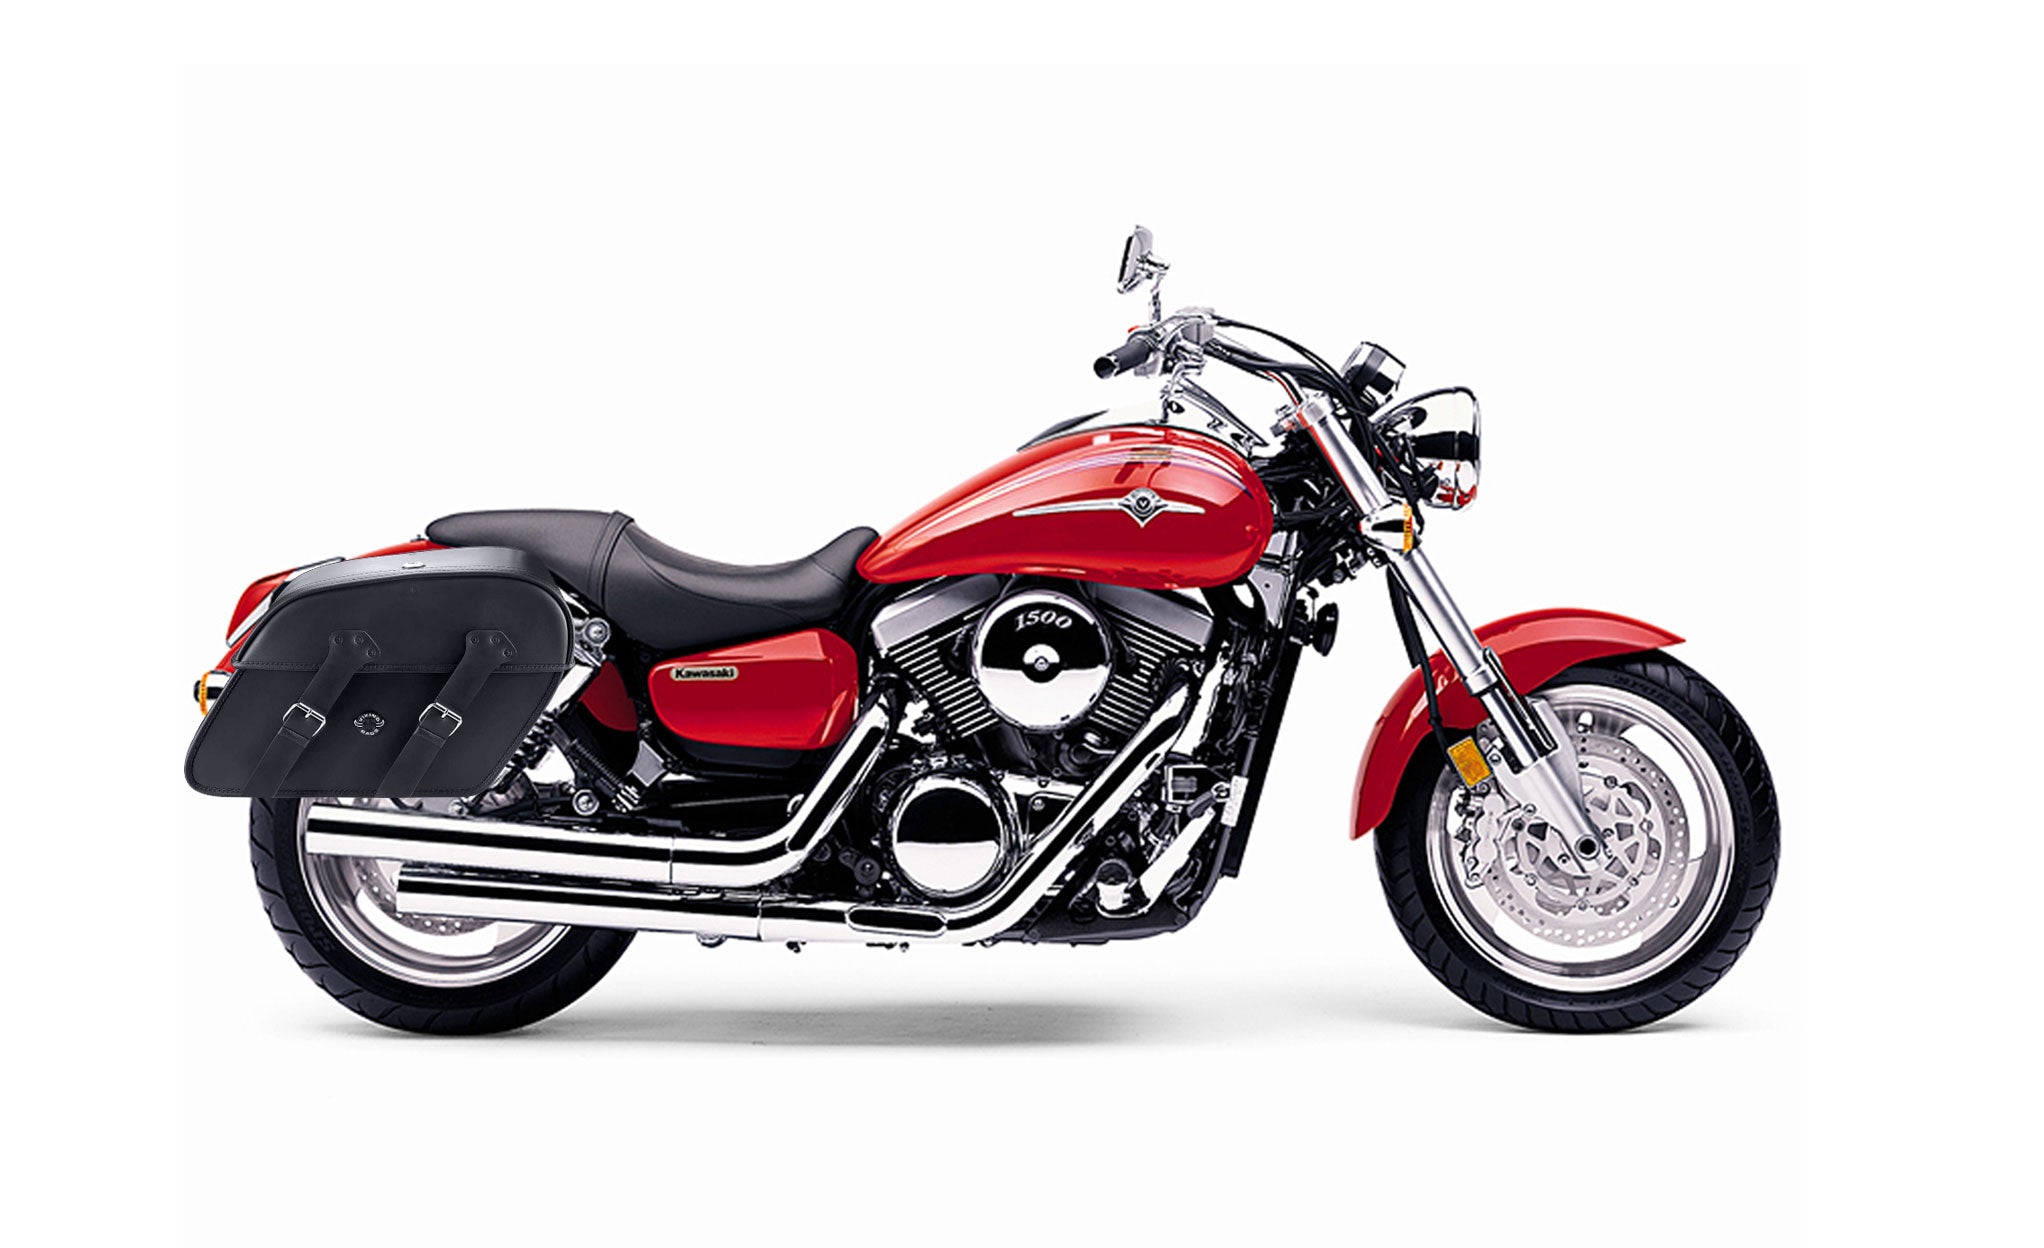 Viking Raven Extra Large Kawasaki Mean Streak 1500 Leather Motorcycle Saddlebags on Bike Photo @expand